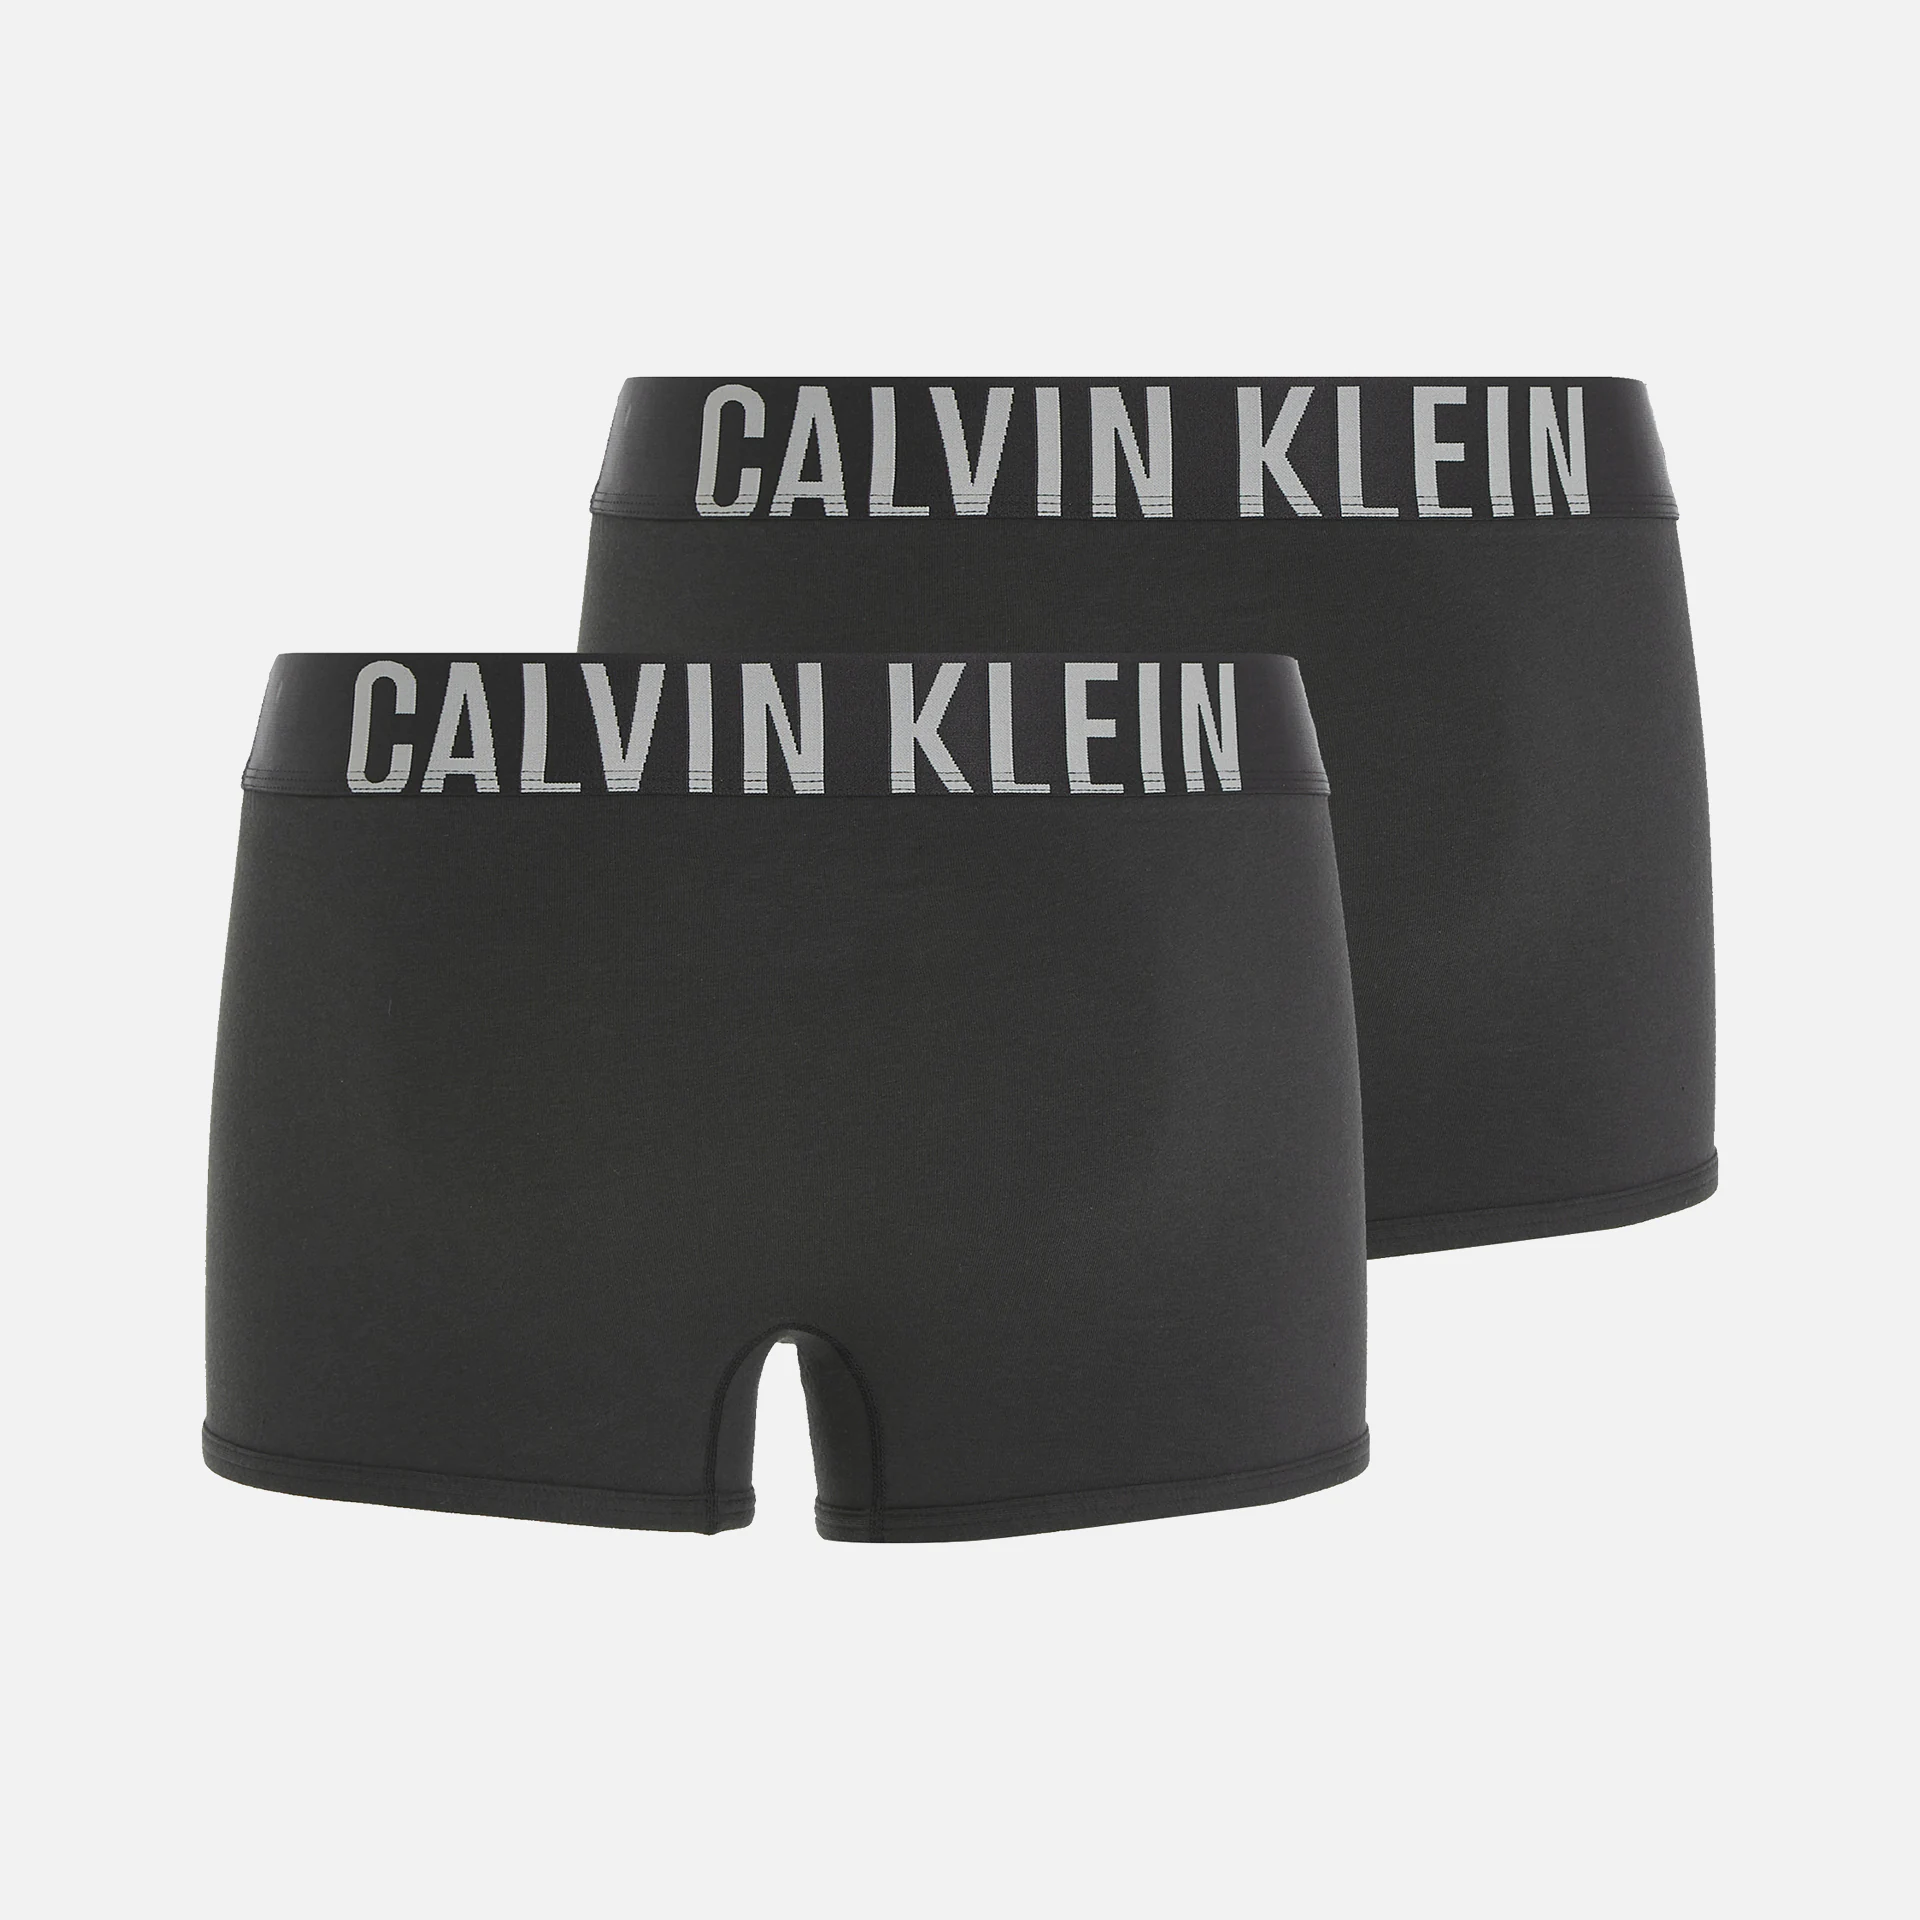 Calvin Klein 2Pack Trunk Black